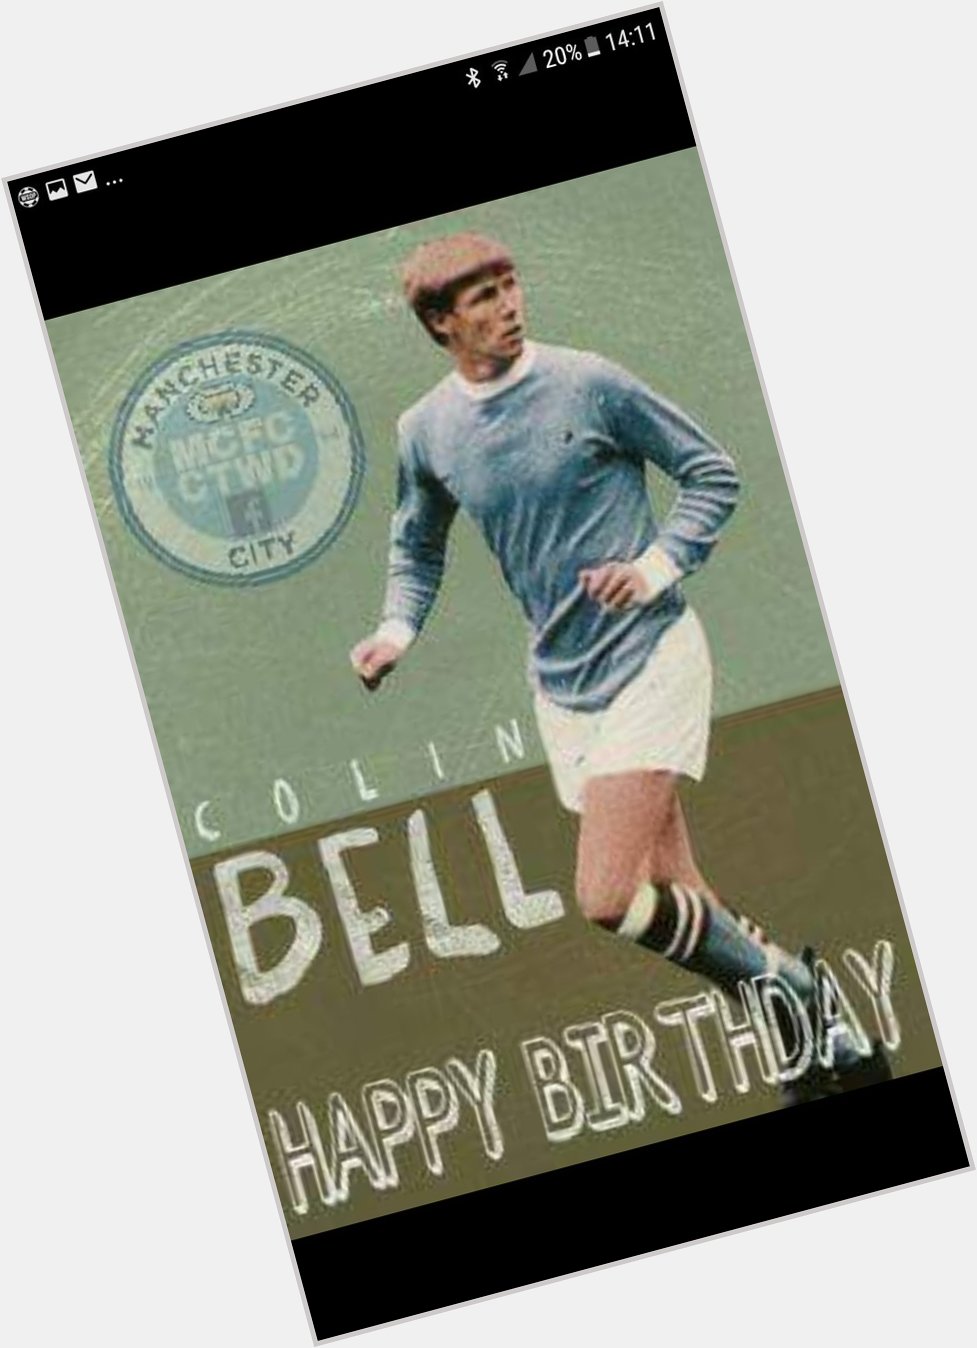 Happy birthday Colin bell a true city legend 